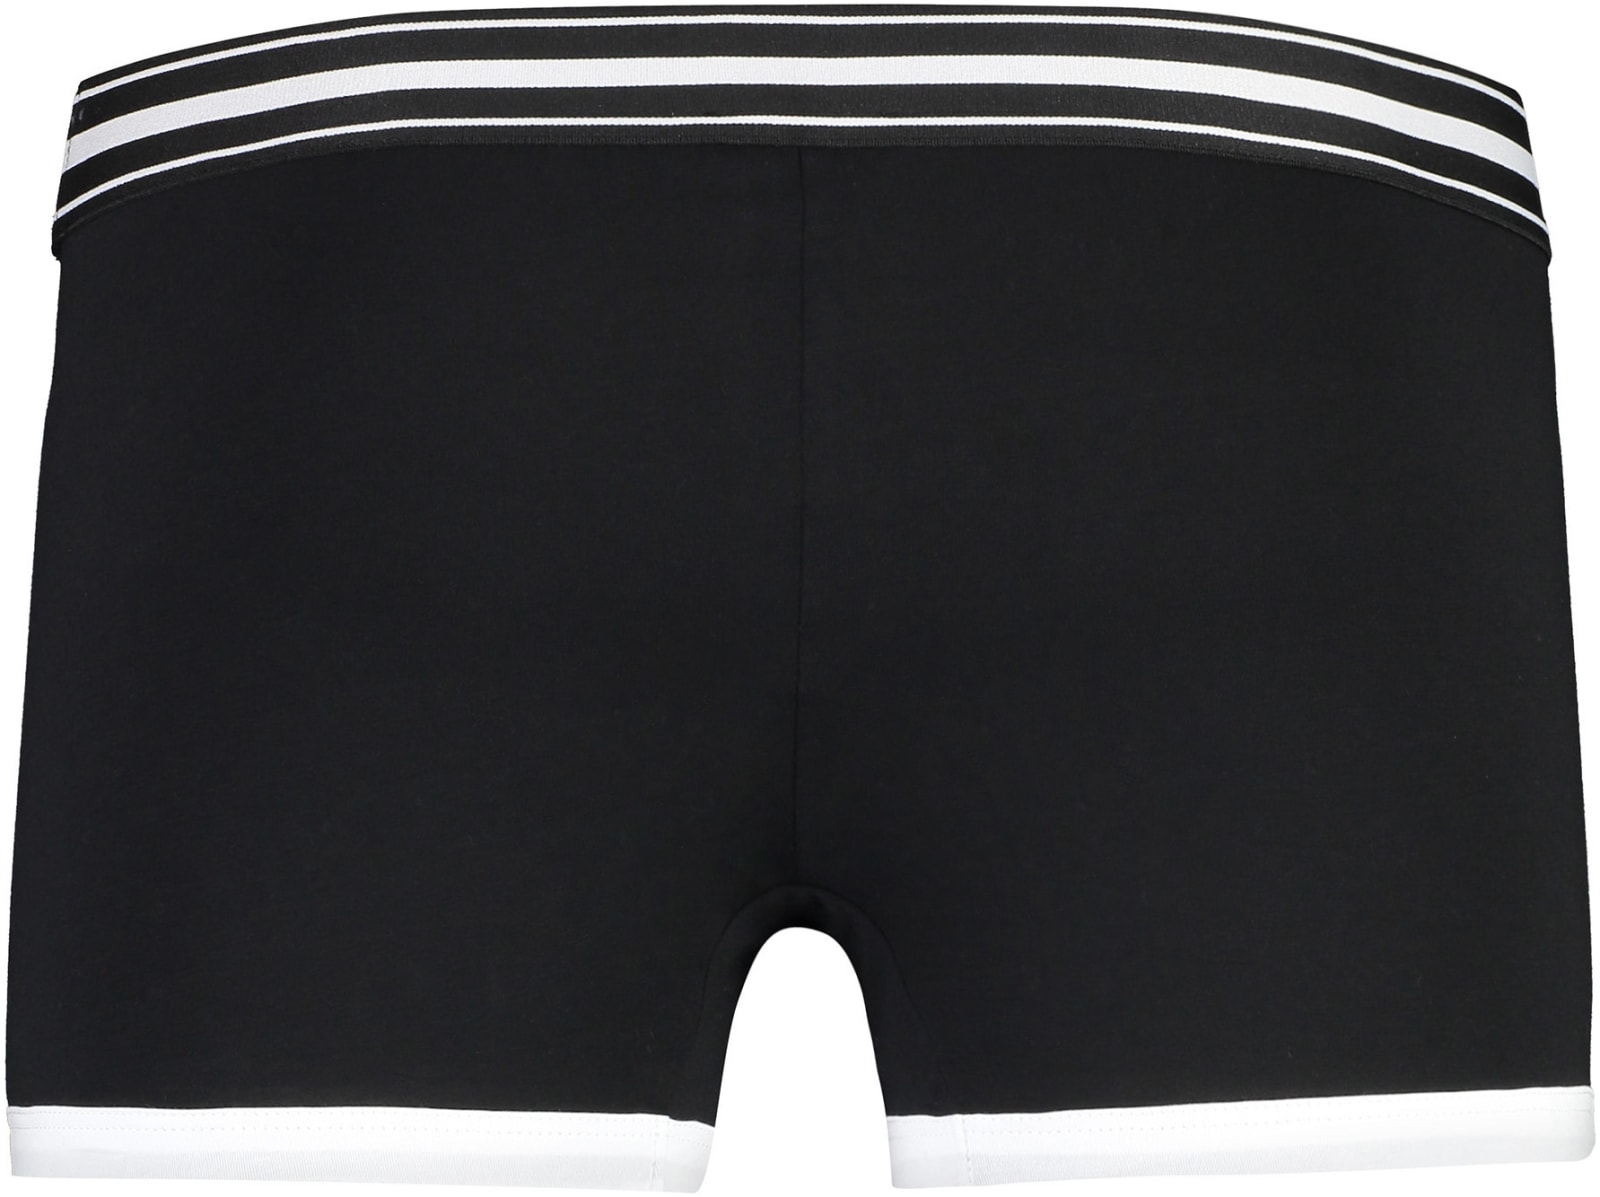 Shop Dolce & Gabbana Logoed Elastic Band Cotton Trunks In Black/white